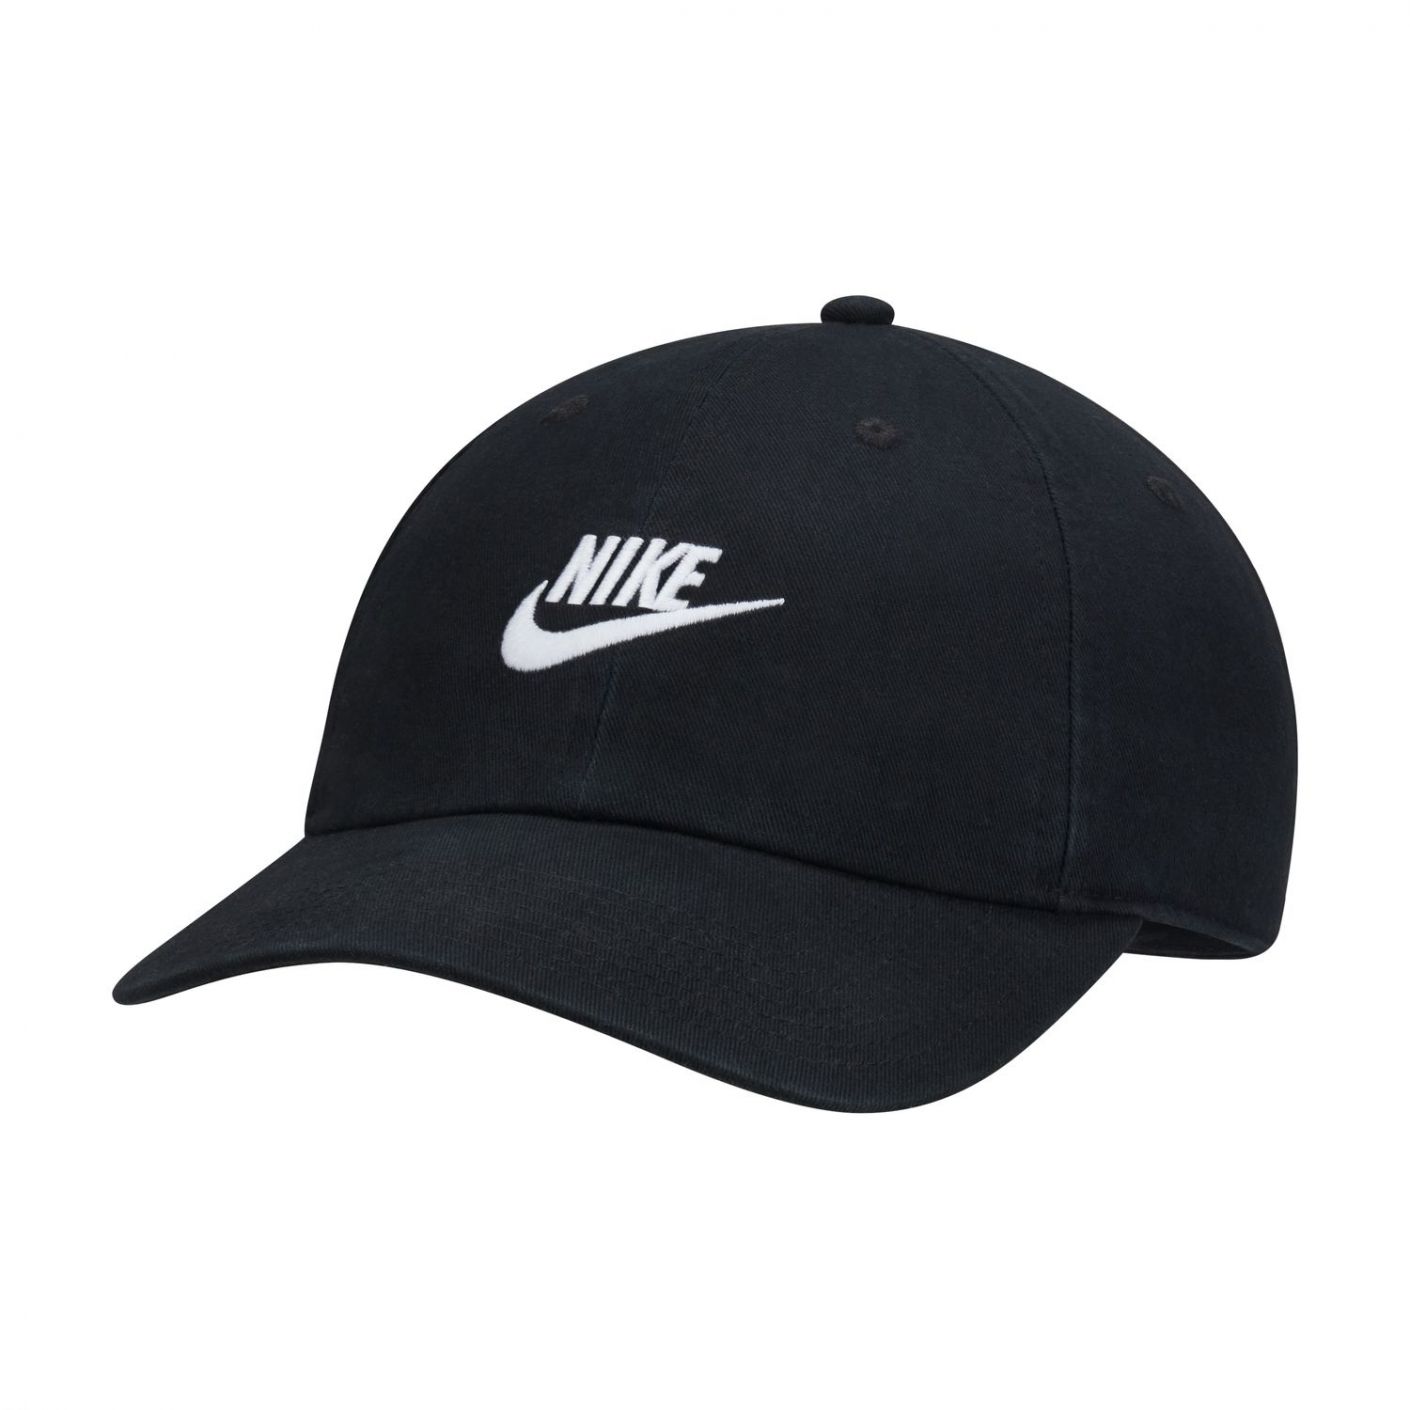 Nike Heritage86 Futura Washed Black Hat